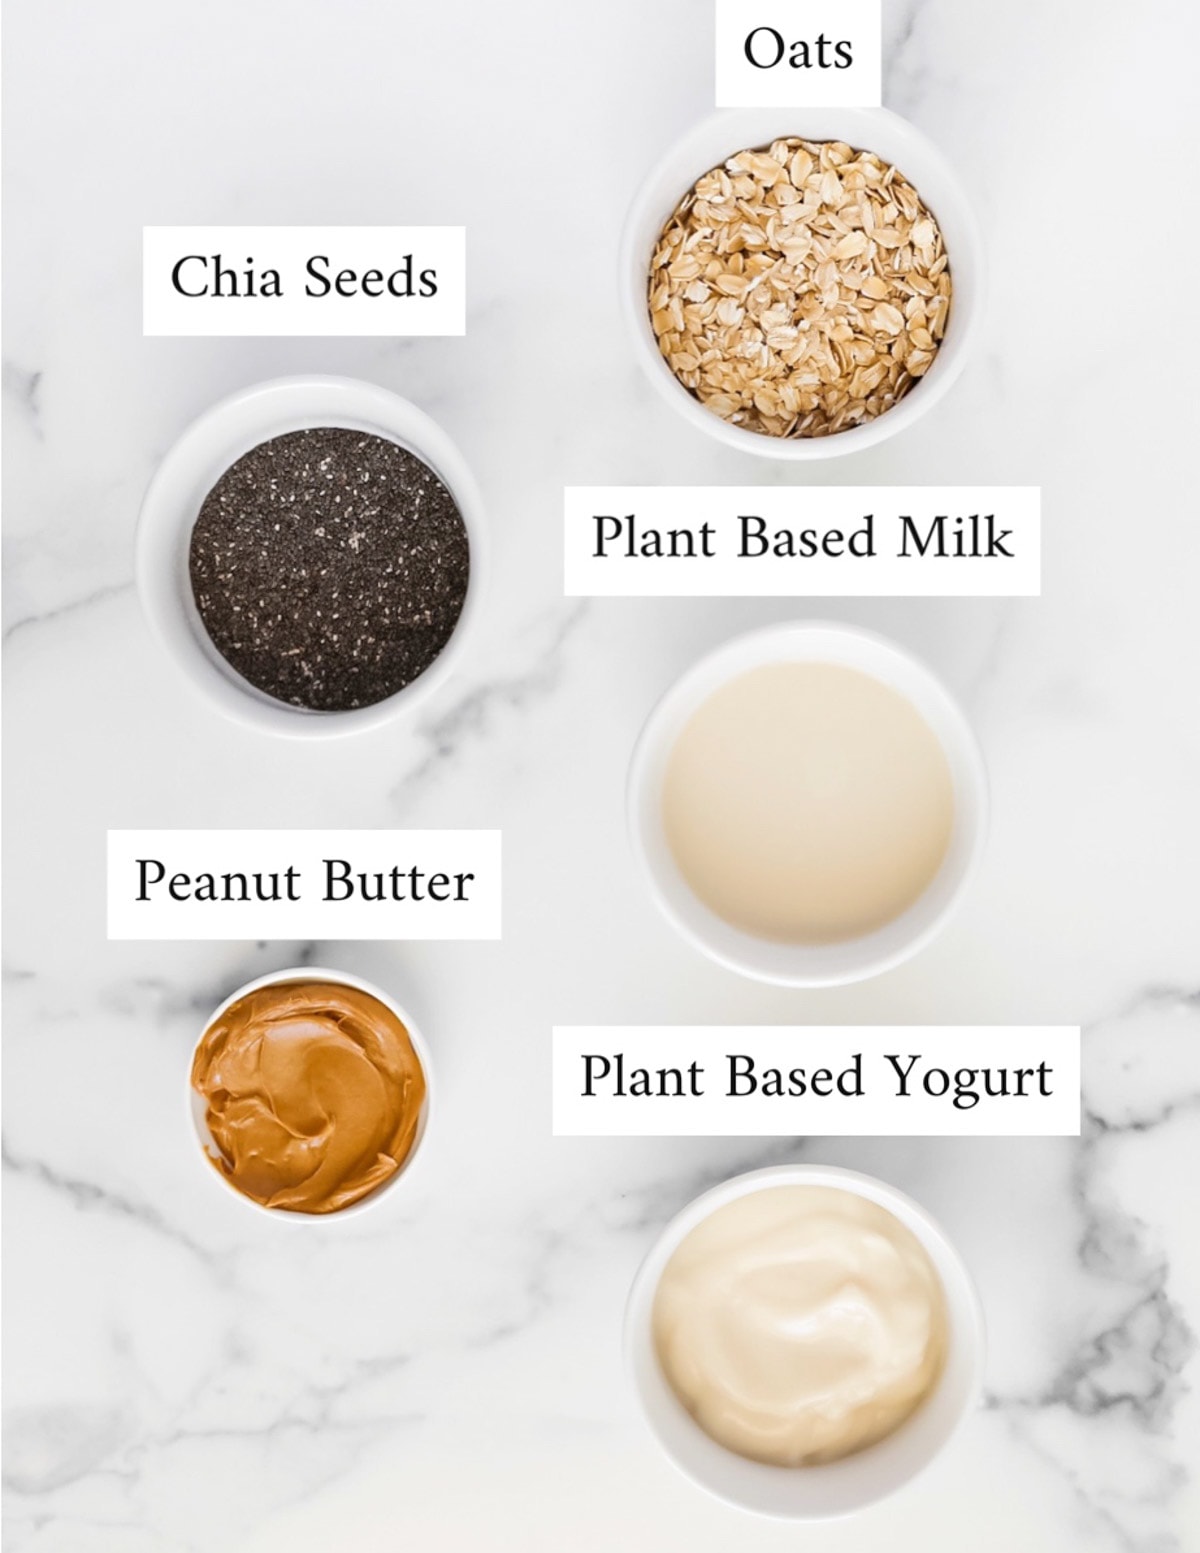 Labeled ingredients including: oats, chia seeds, plant based milk, peanut butter, plant based yogurt